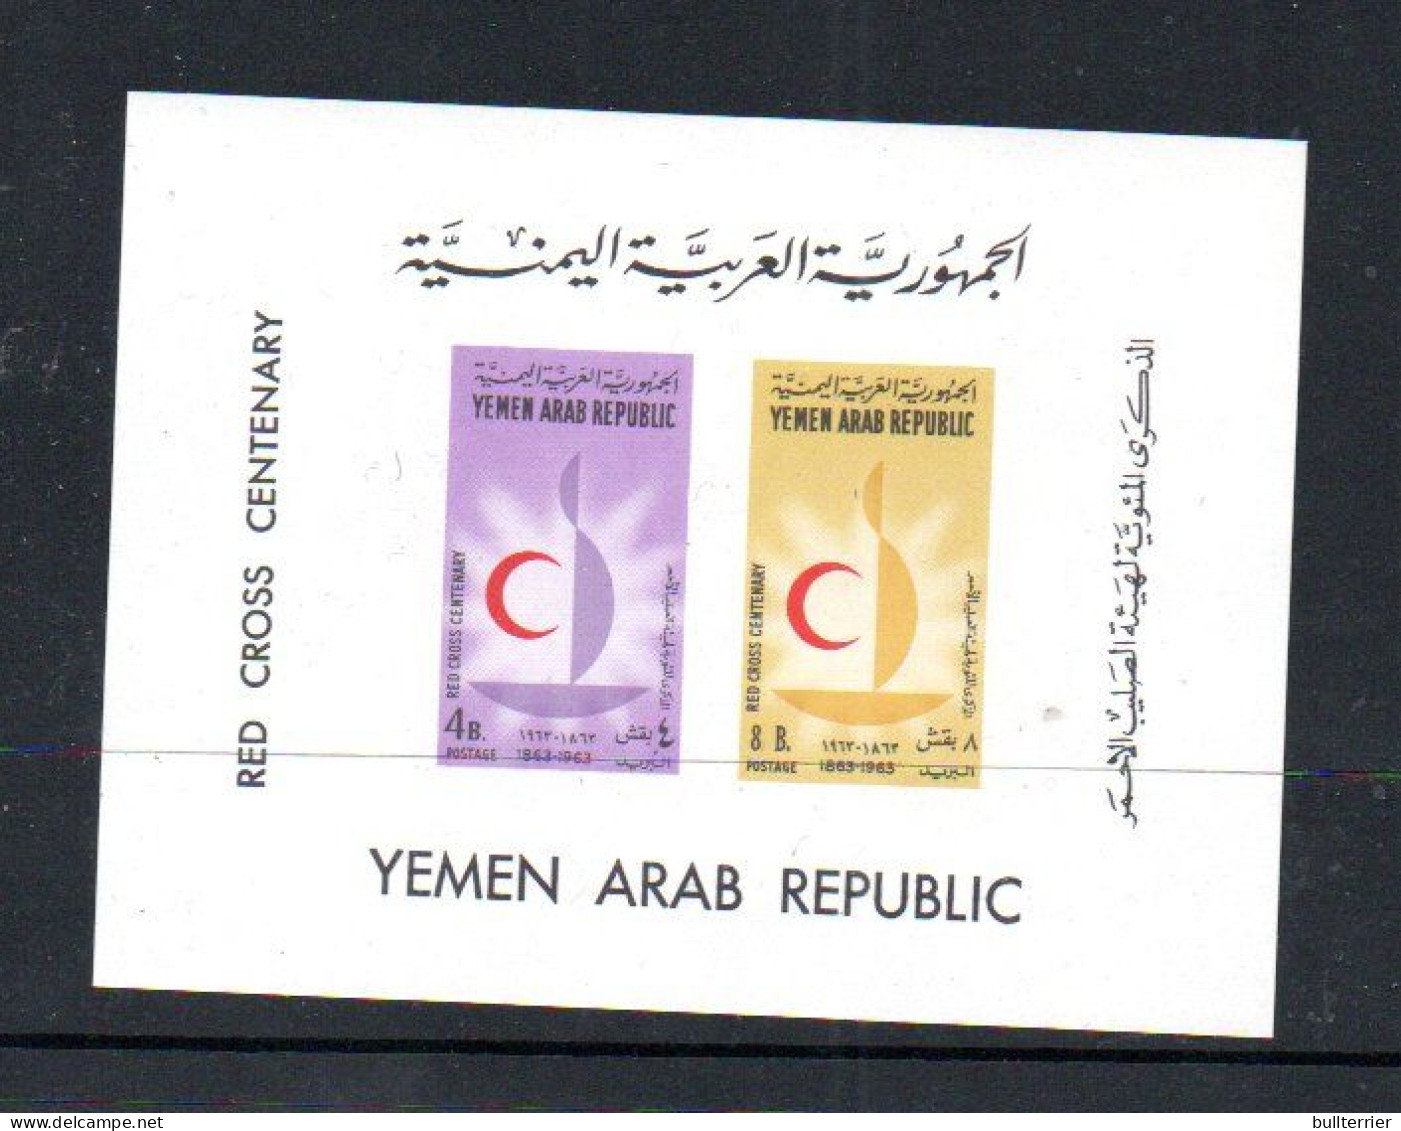 MEDICINE - YEMEN ARAB REPUBLIC - 1963 - RED CROSS CENTENARY  S/SHEET MINT NEVER HINGED SG £22 - Medizin